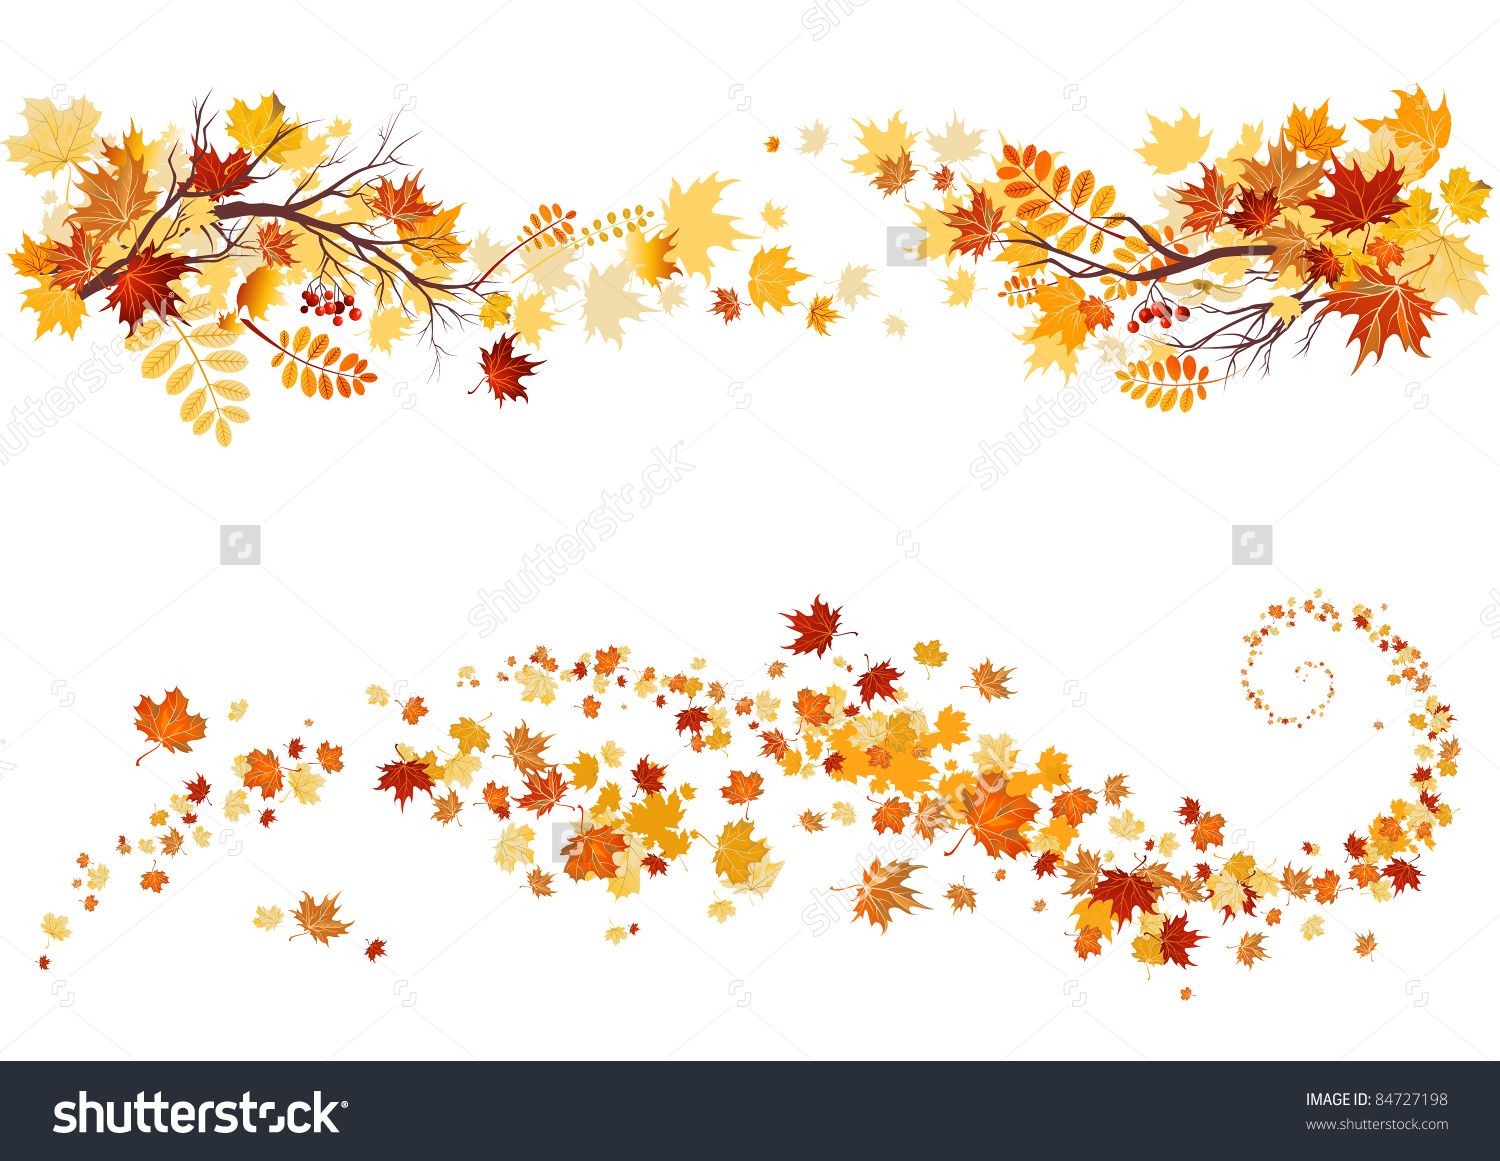 Autumn leaves border.